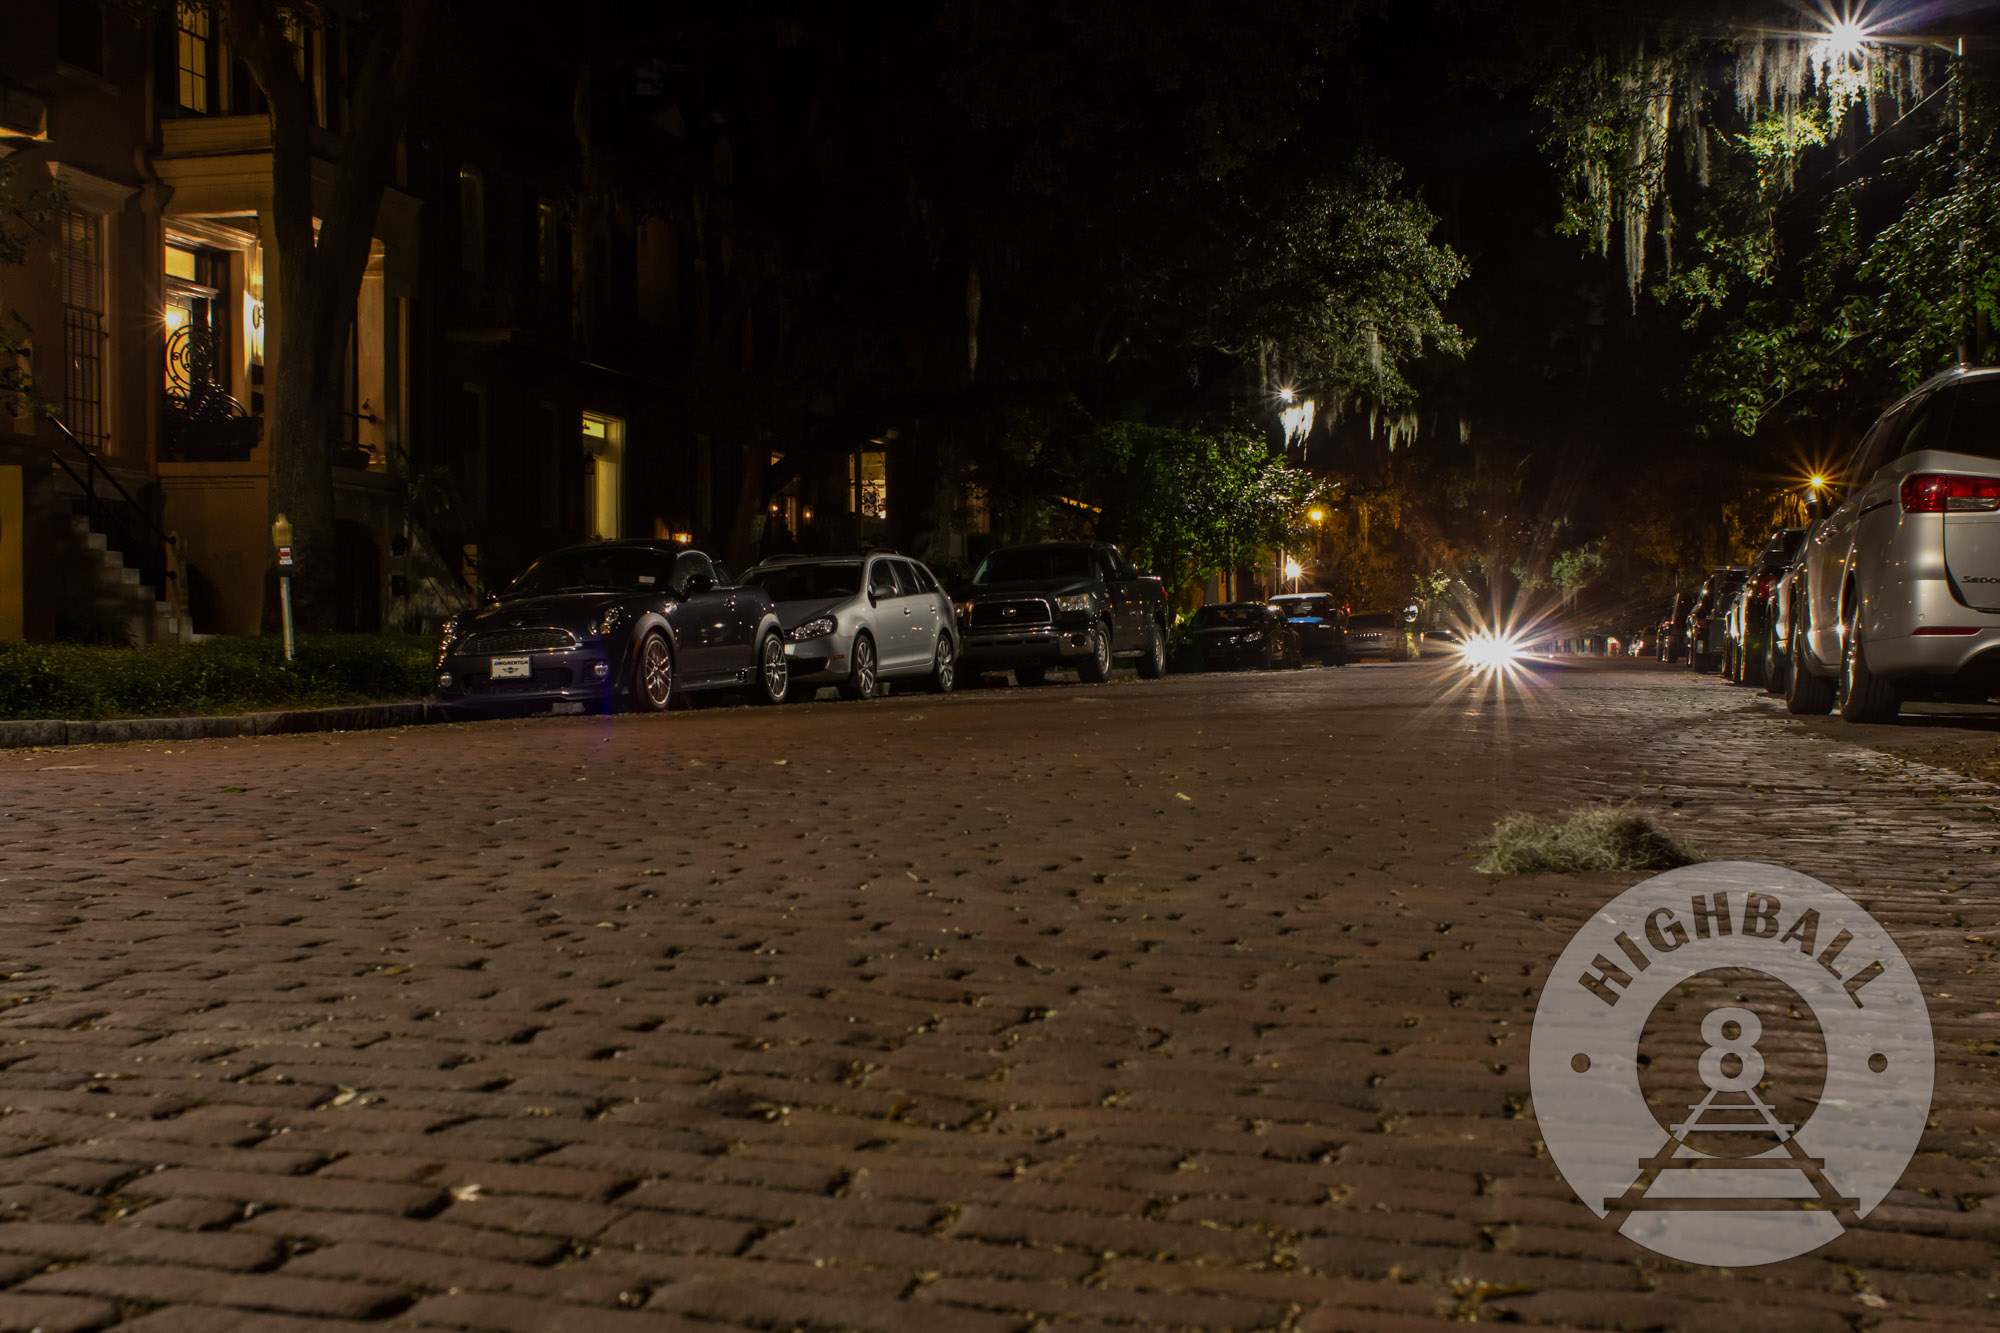 Night scene in the Historic District, Savannah, Georgia, USA, 2015.